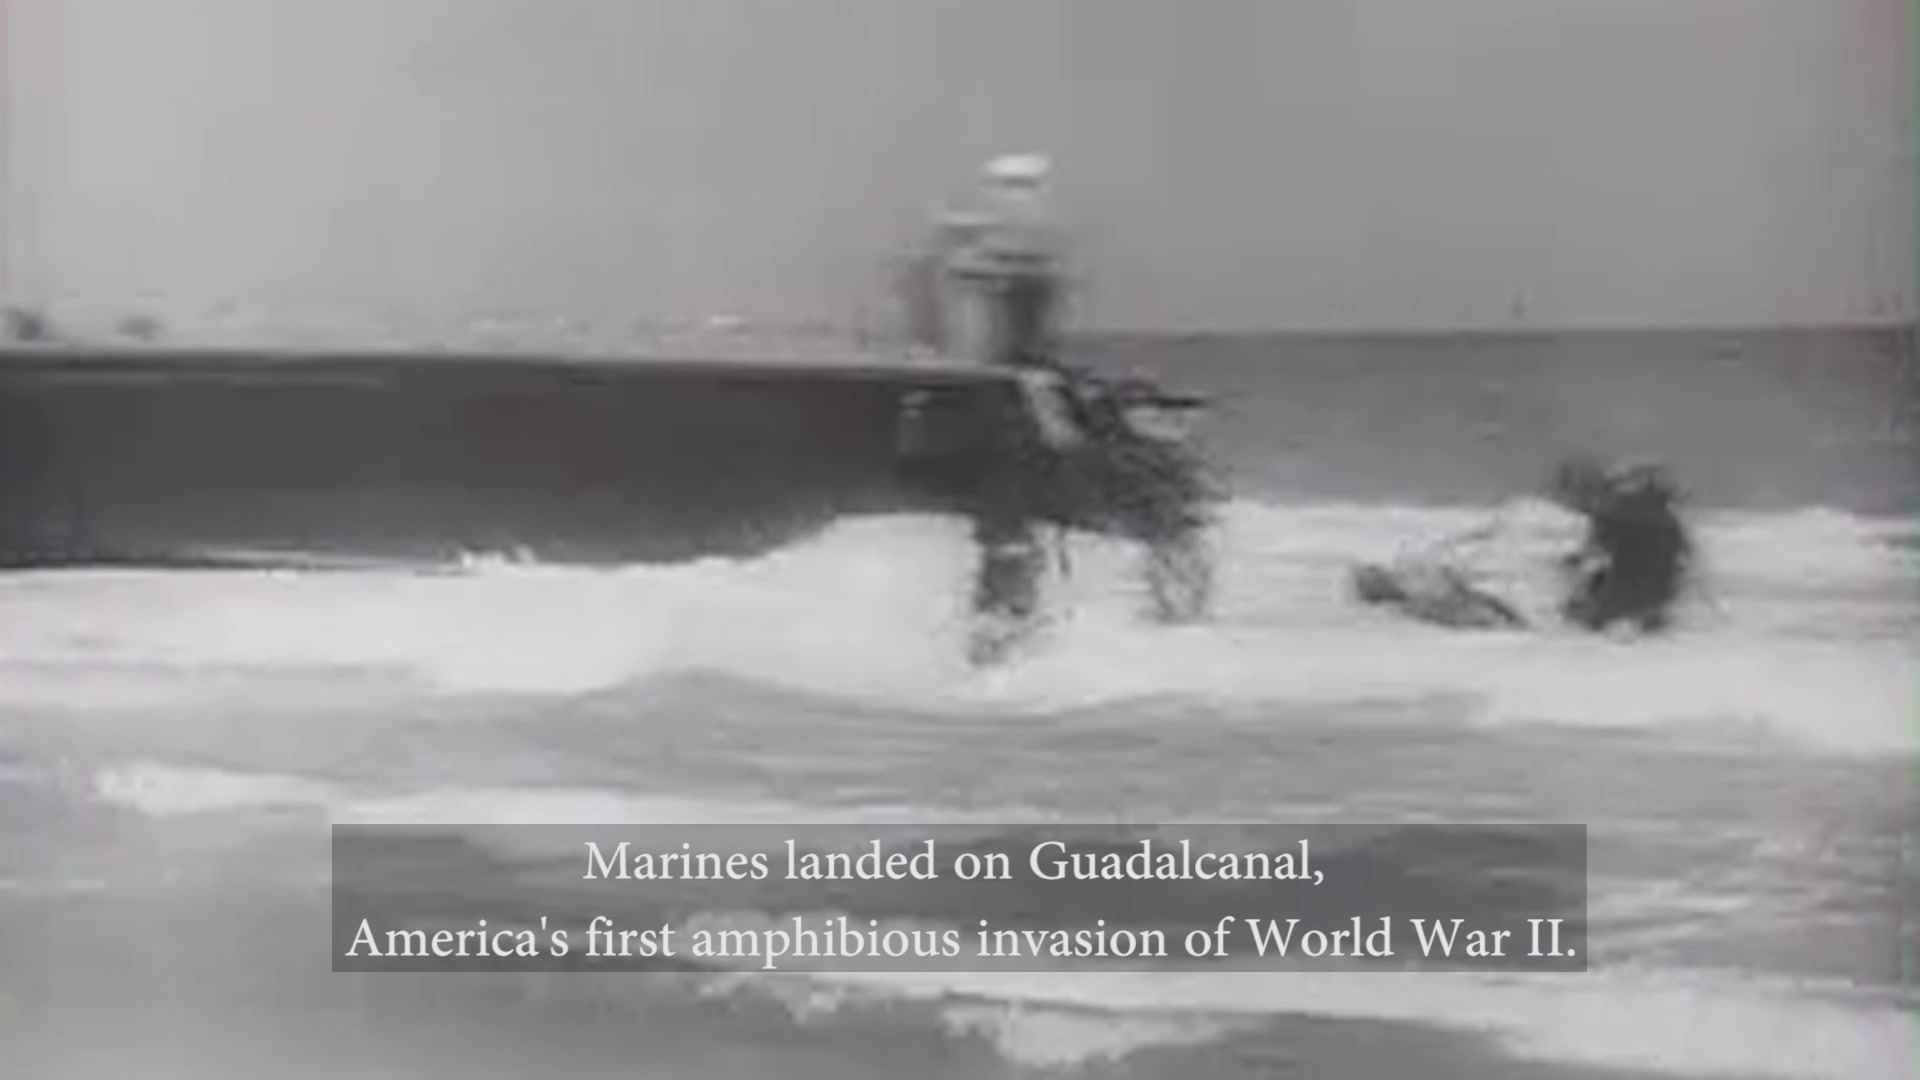 Guadalcanal • America’s First World War II Amphibious Invasion • 78 years Ago – Aug. 7, 2020